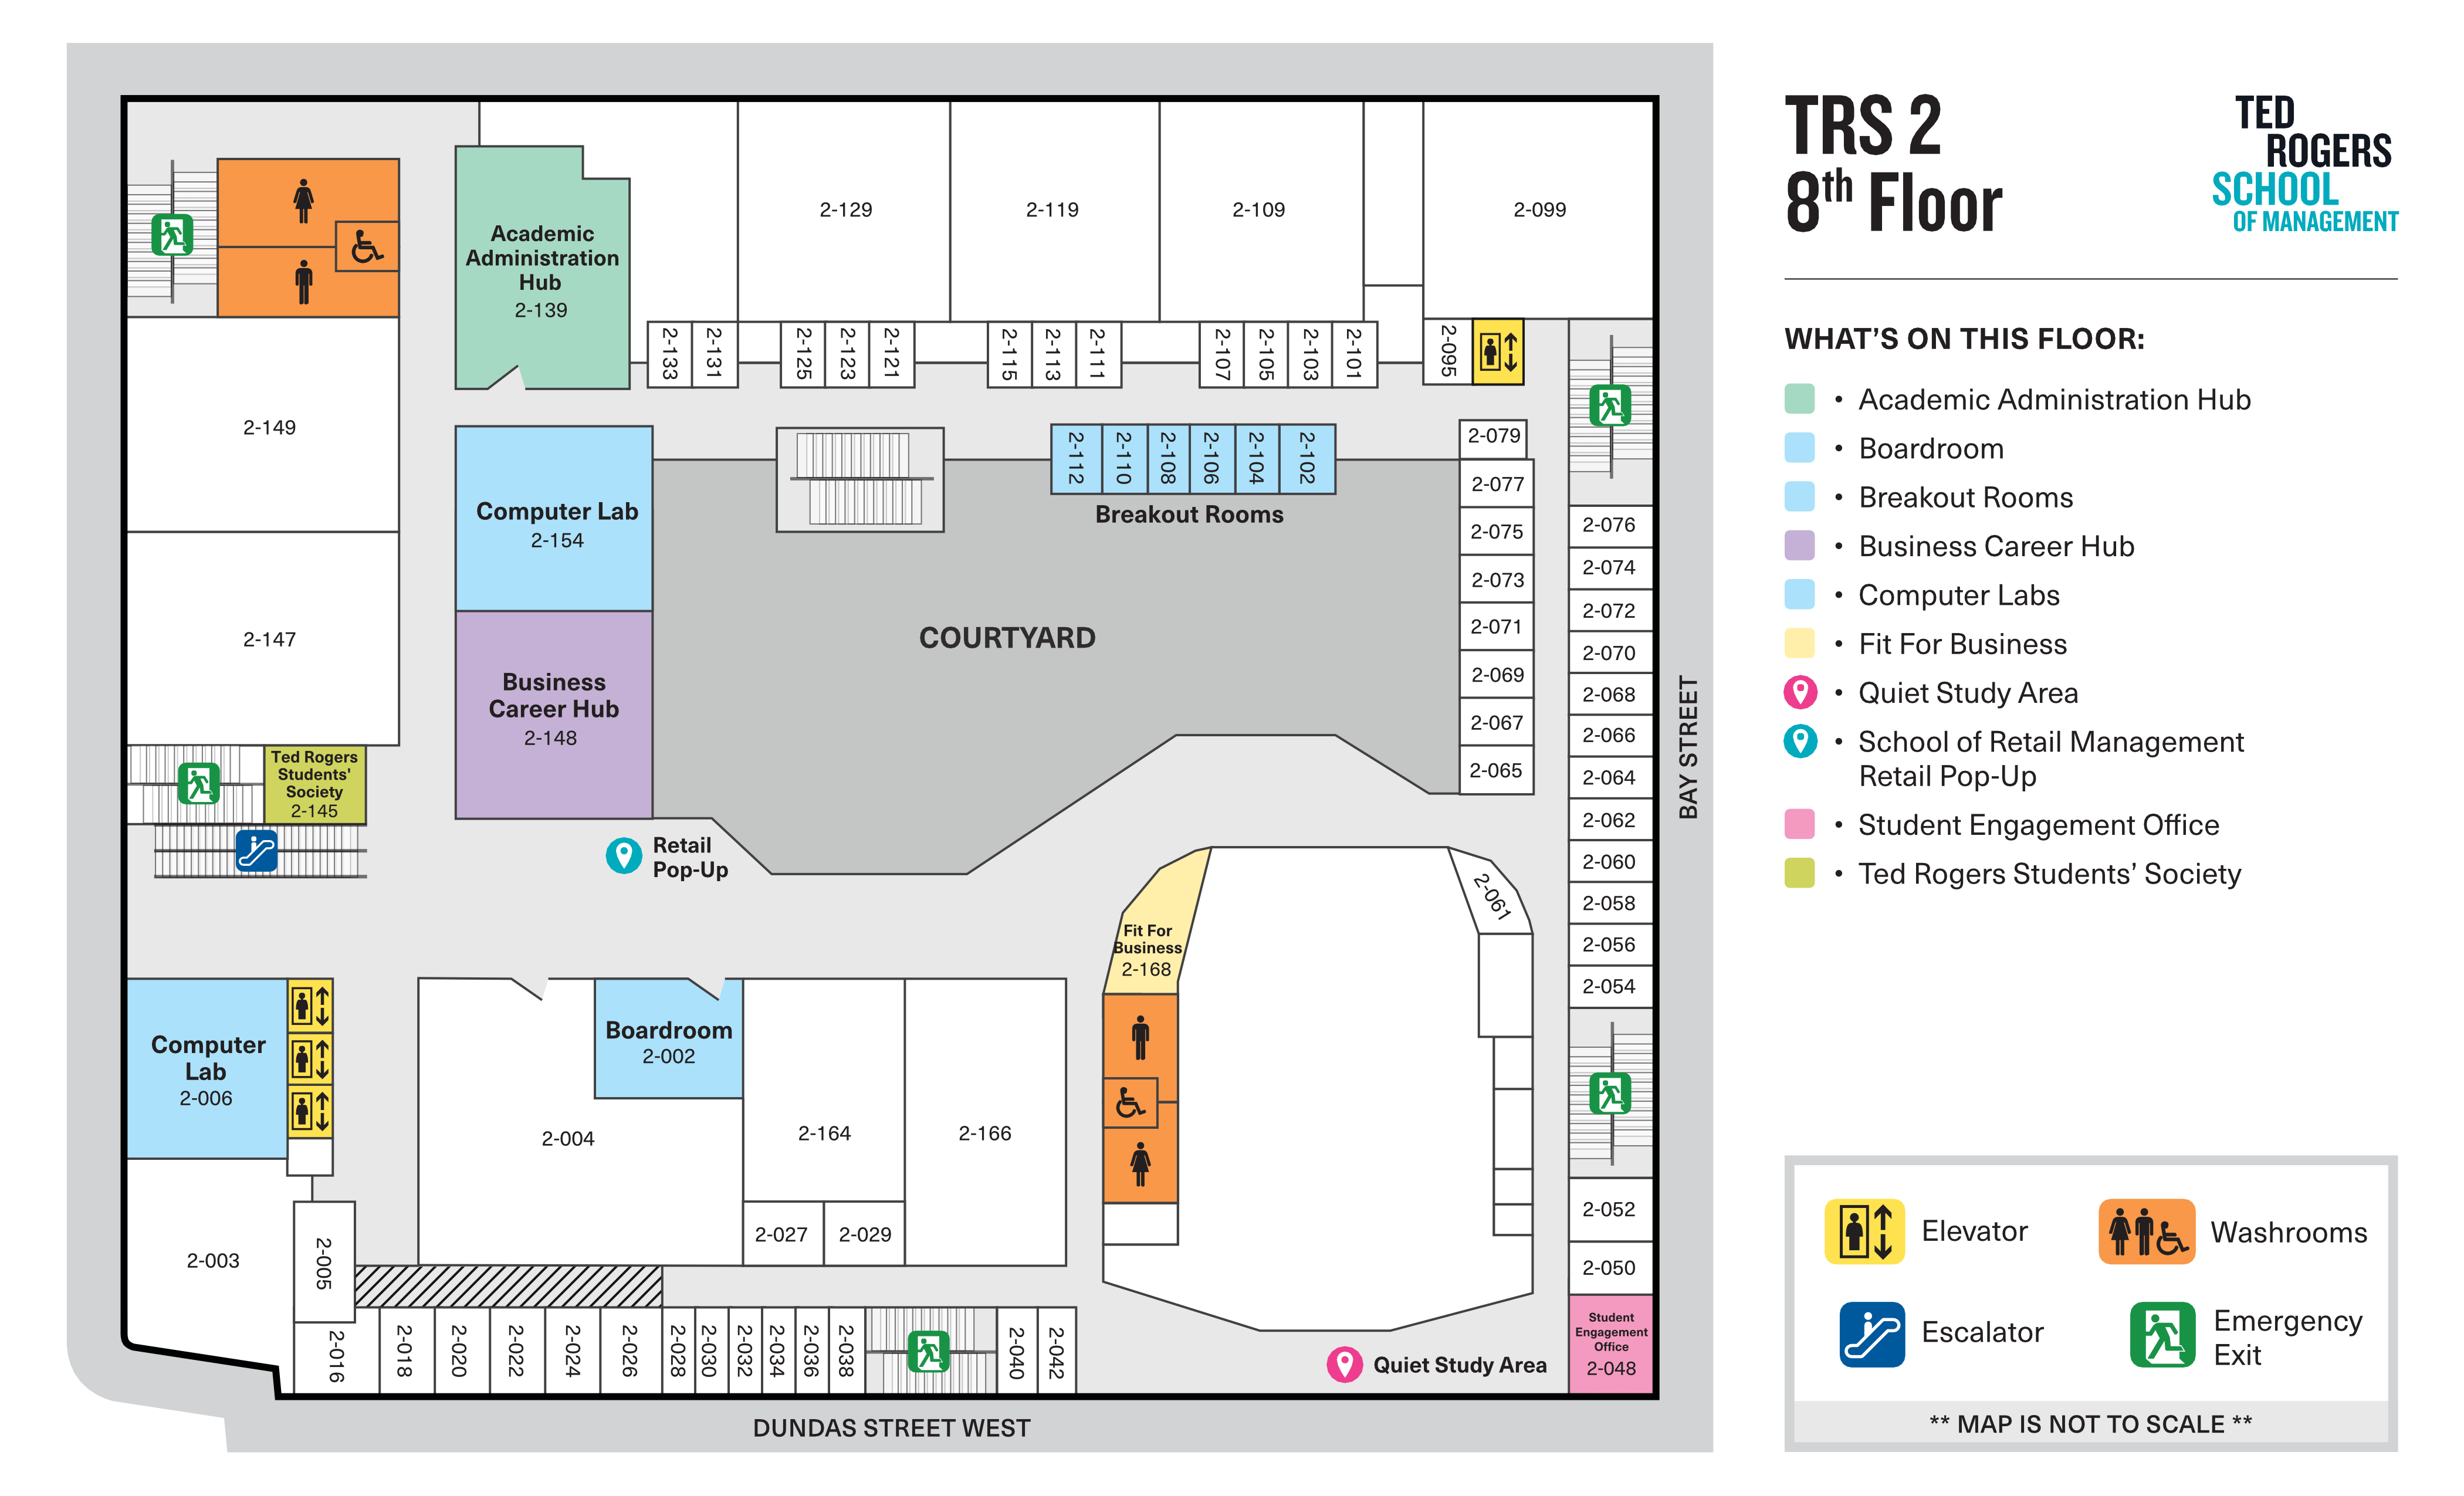 TRSM 8th Floor Map